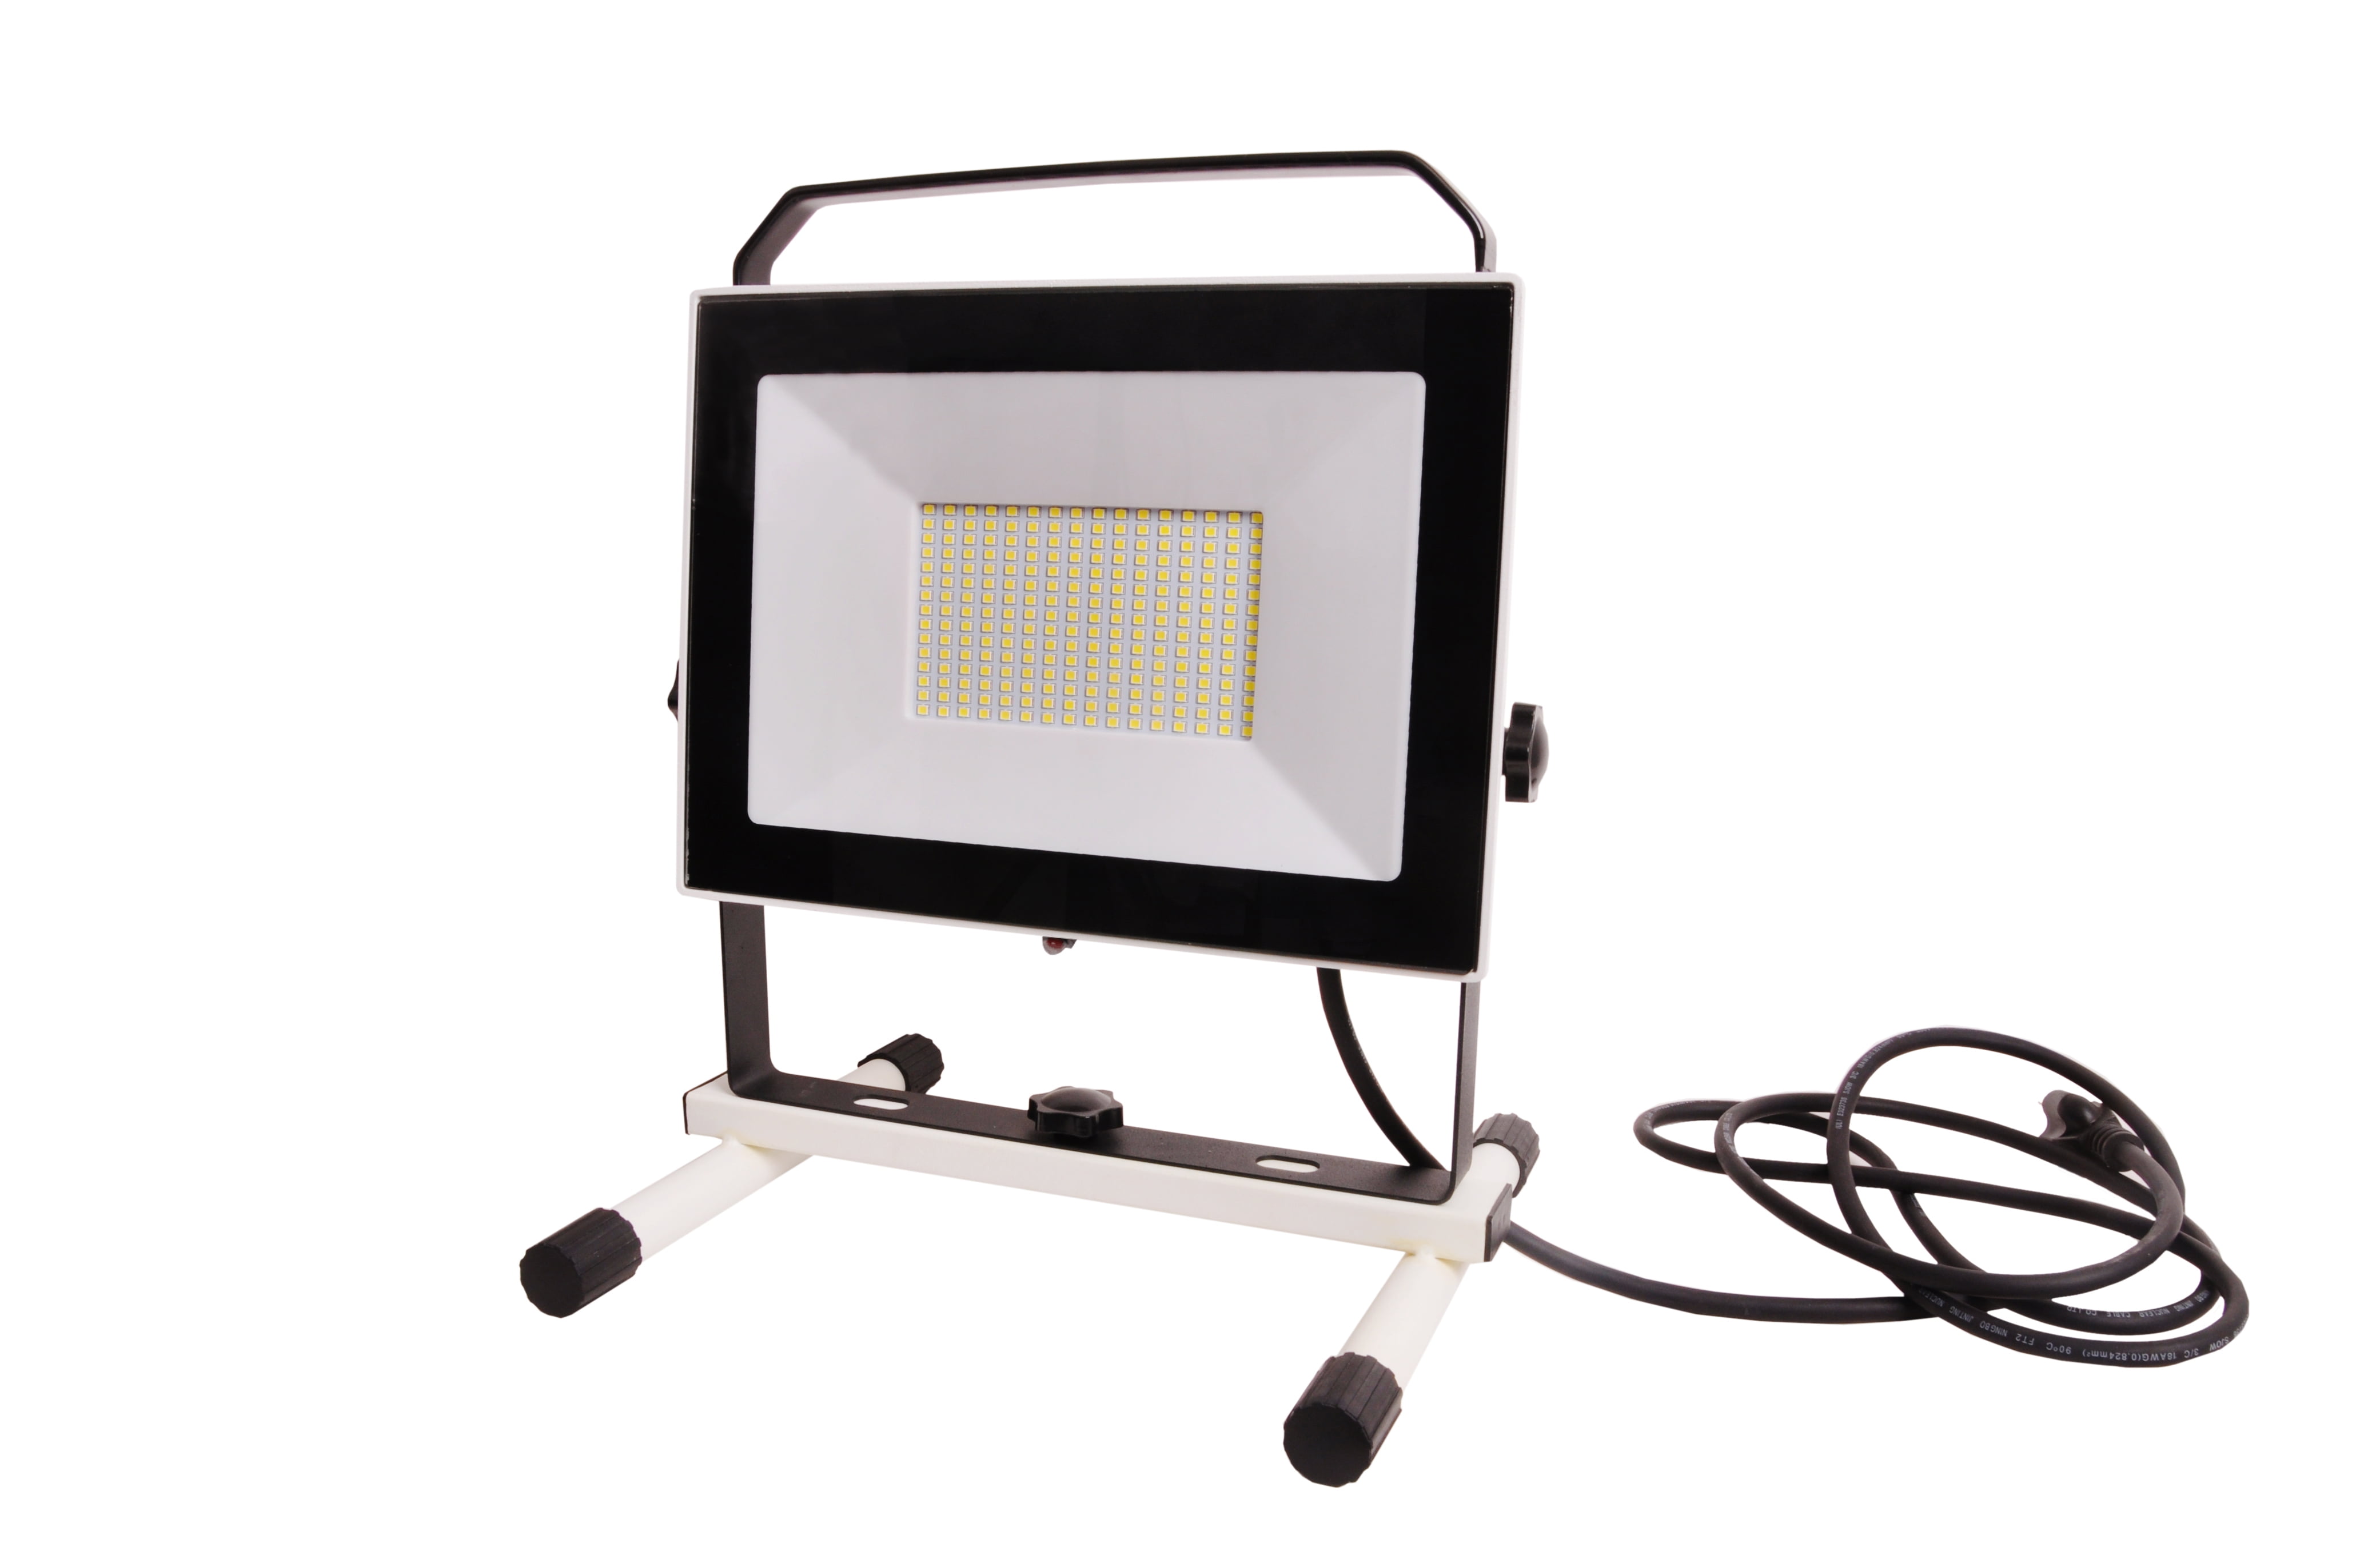 5000LM 50W LED Work Light Waterproof Adjustable 360/270 degree Flood Lamp Stand 